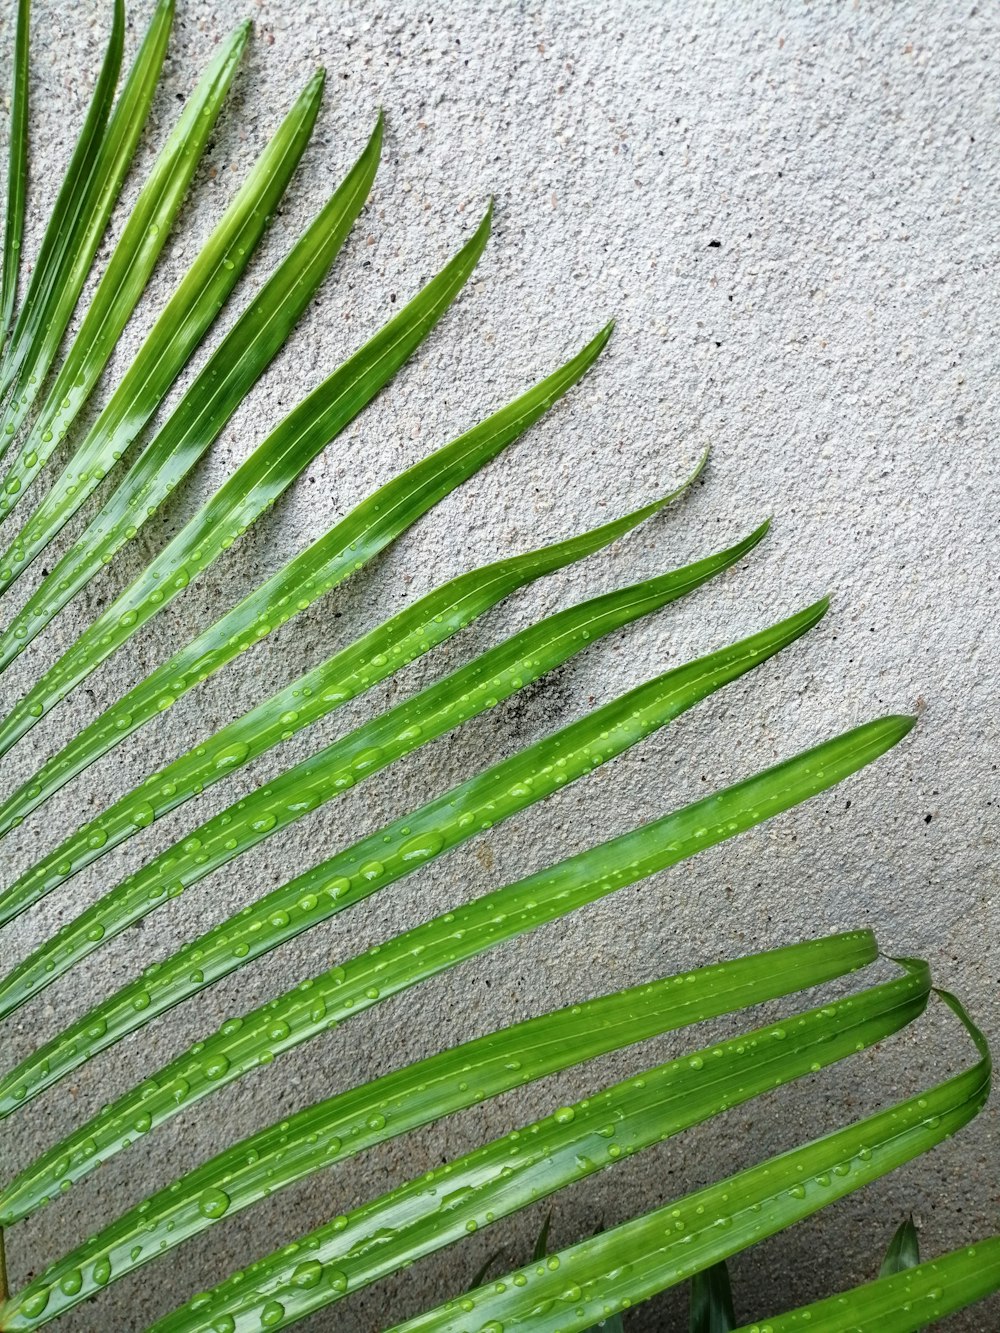 green palm